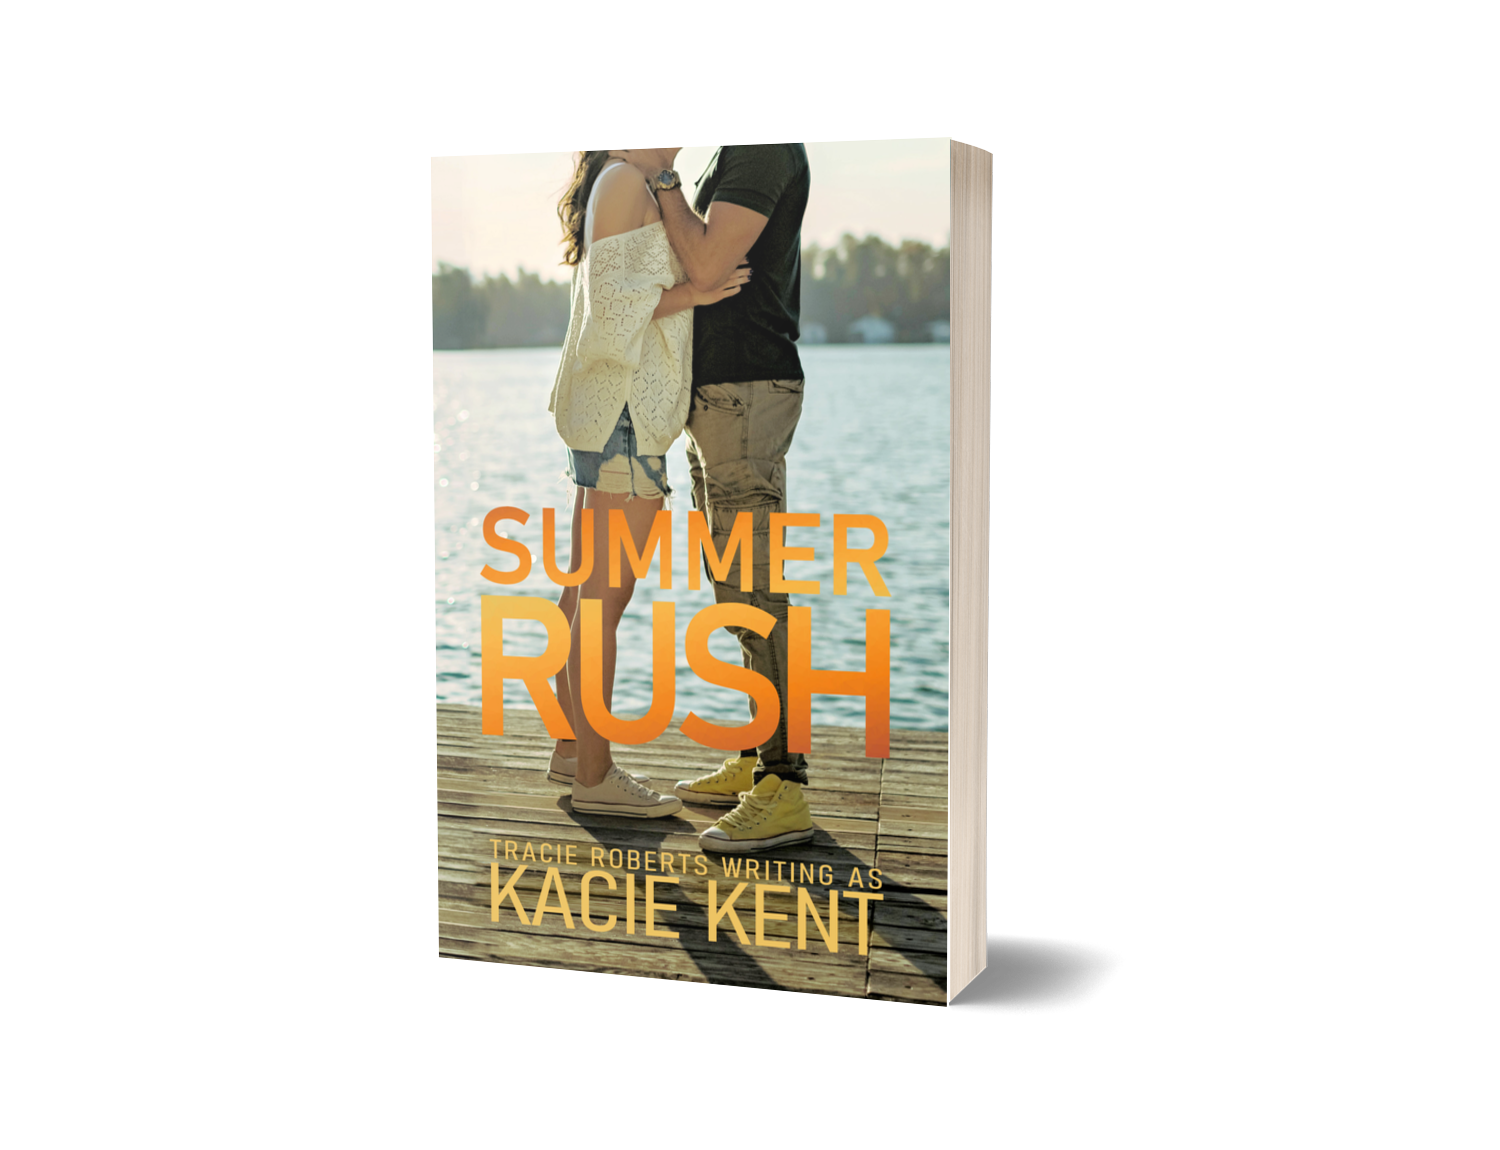 Kacie Kent's debut novel